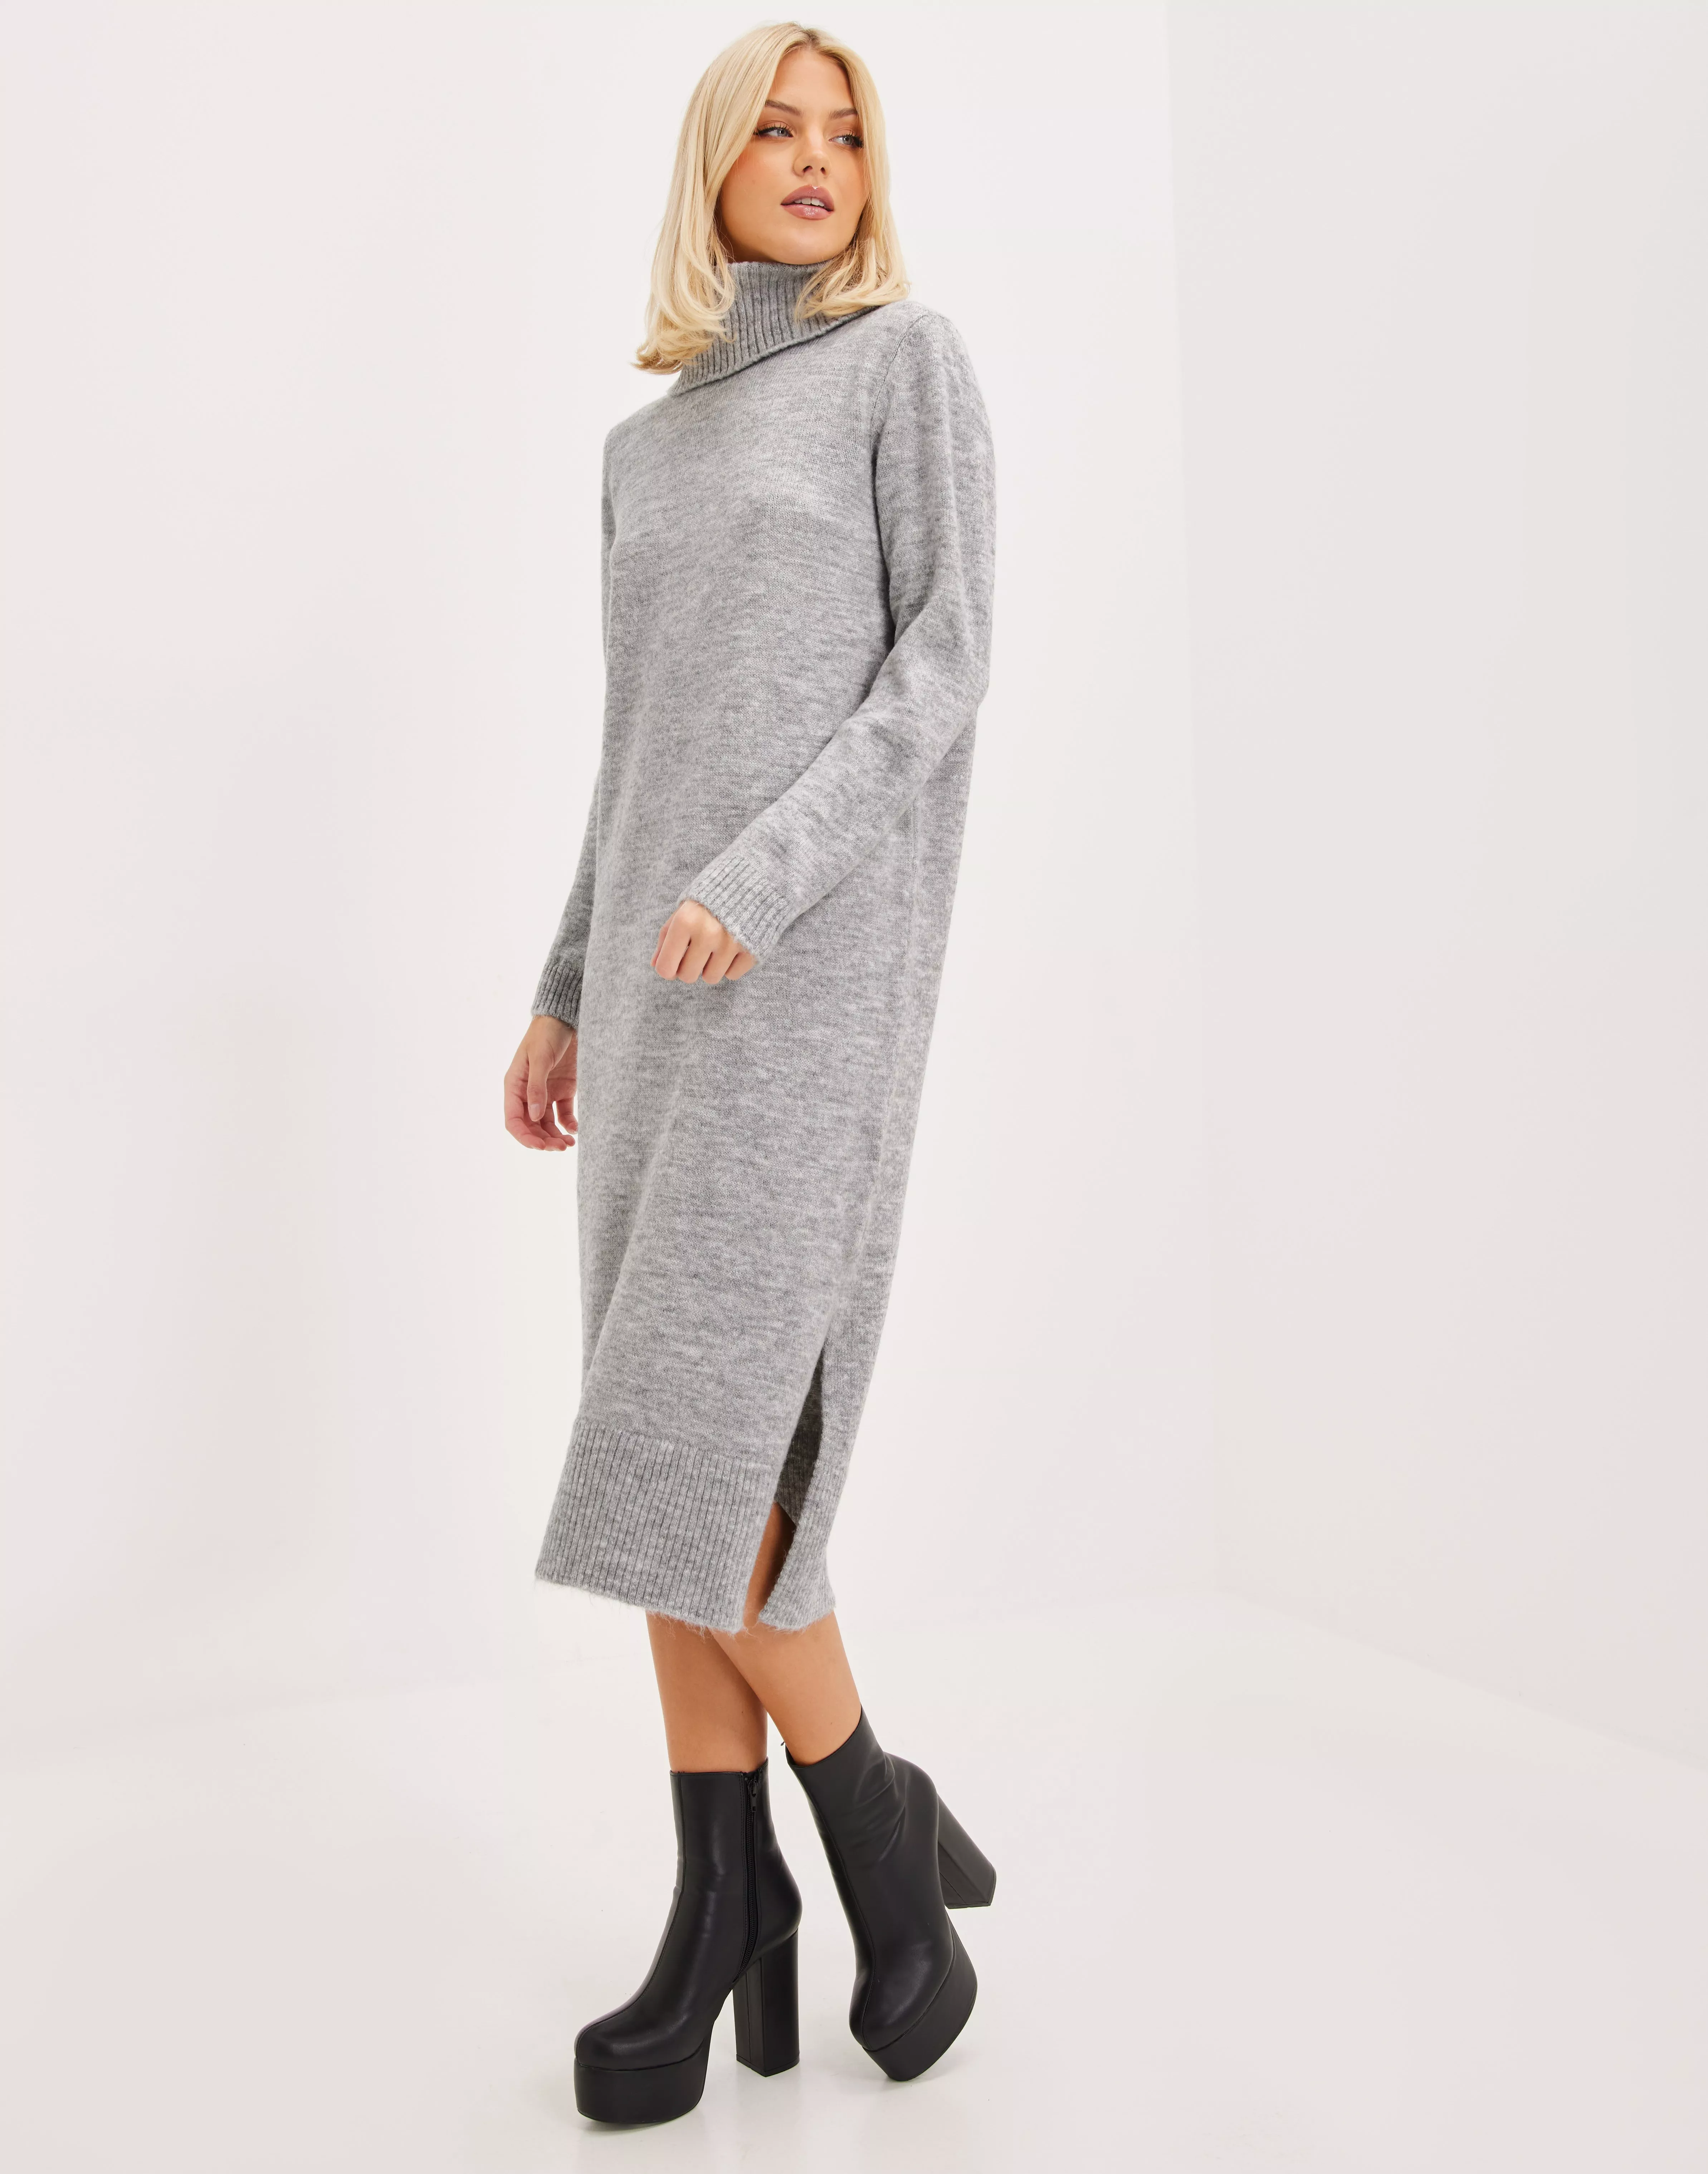 L/S Light ONLBRANDIE Melange Only Buy ROLL NECK - Grey DRESS KNT